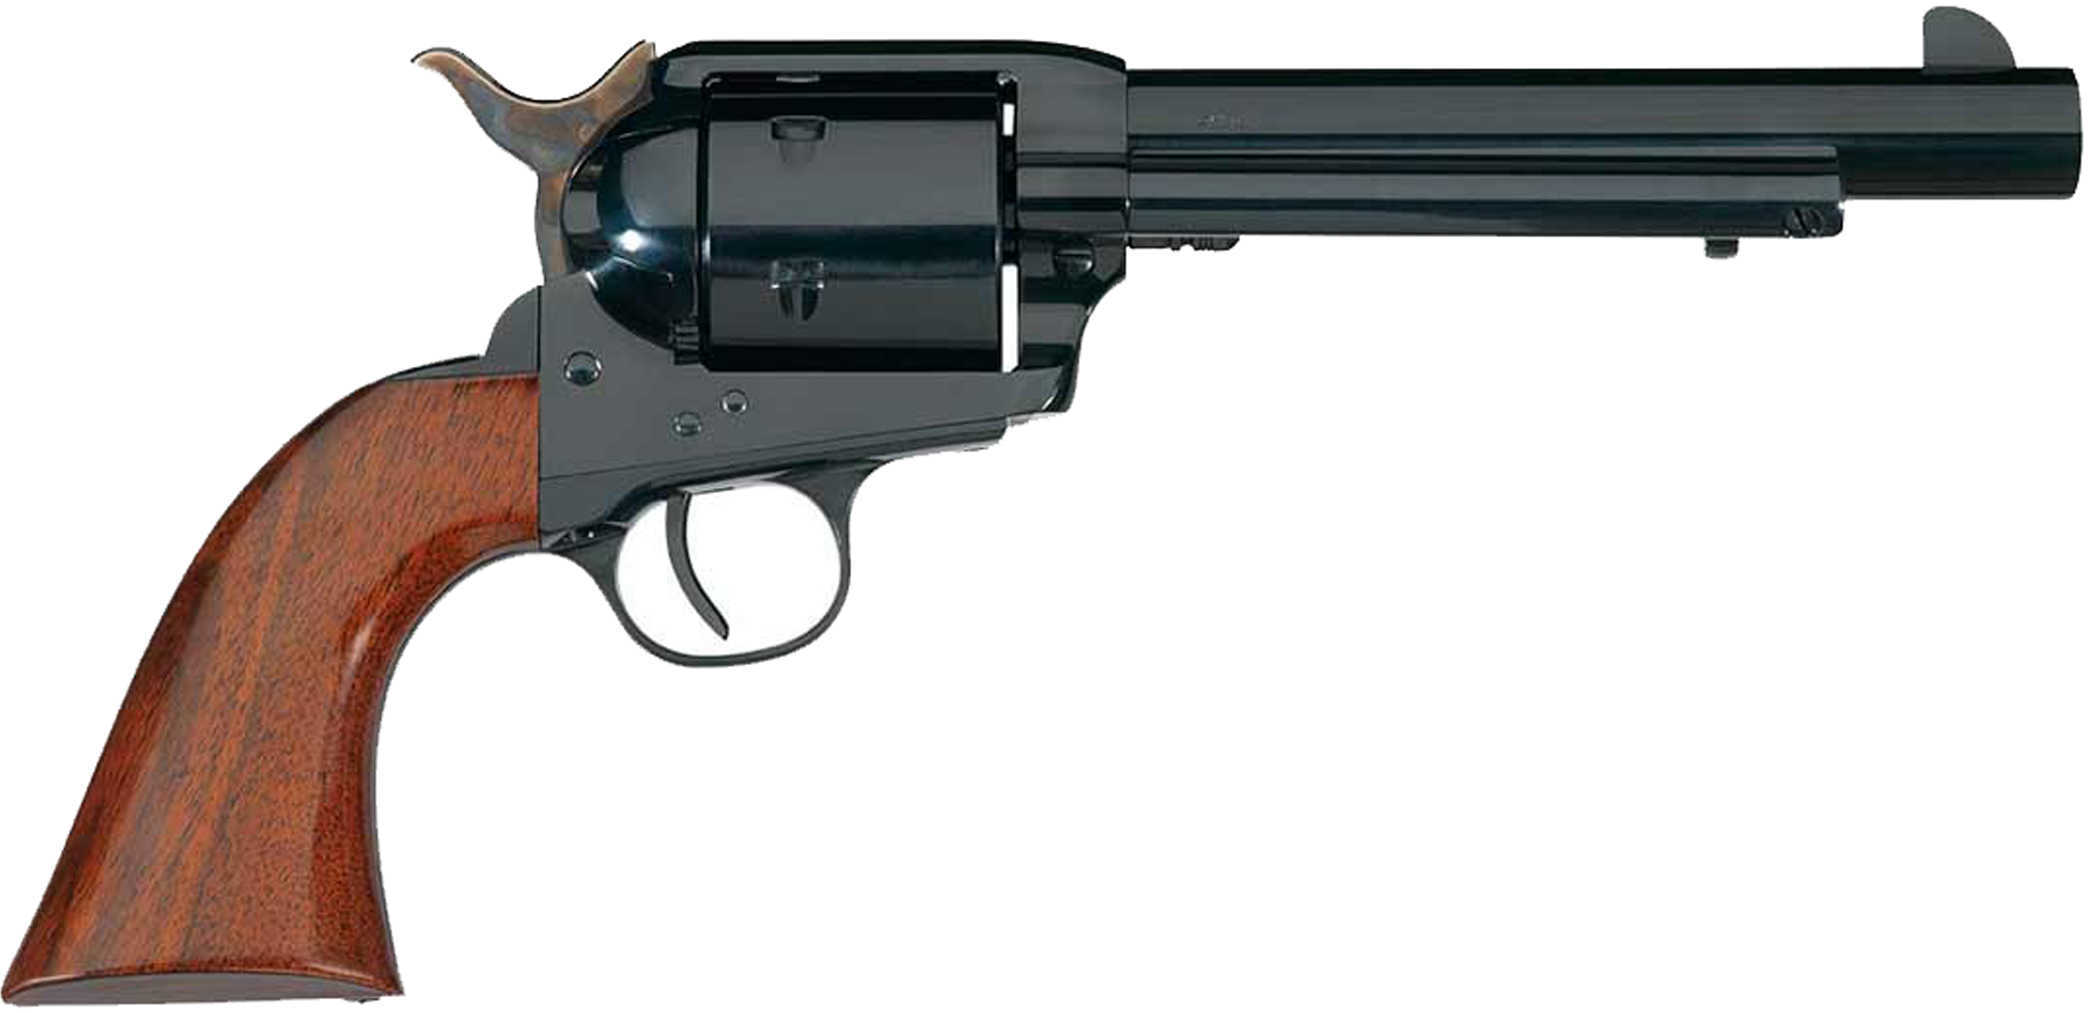 Taylor's & Company 44 Magnum Single Action Cattleman 1873 6" Barrel 6 Round Walnut Grip Blued Finish Revolver 0394